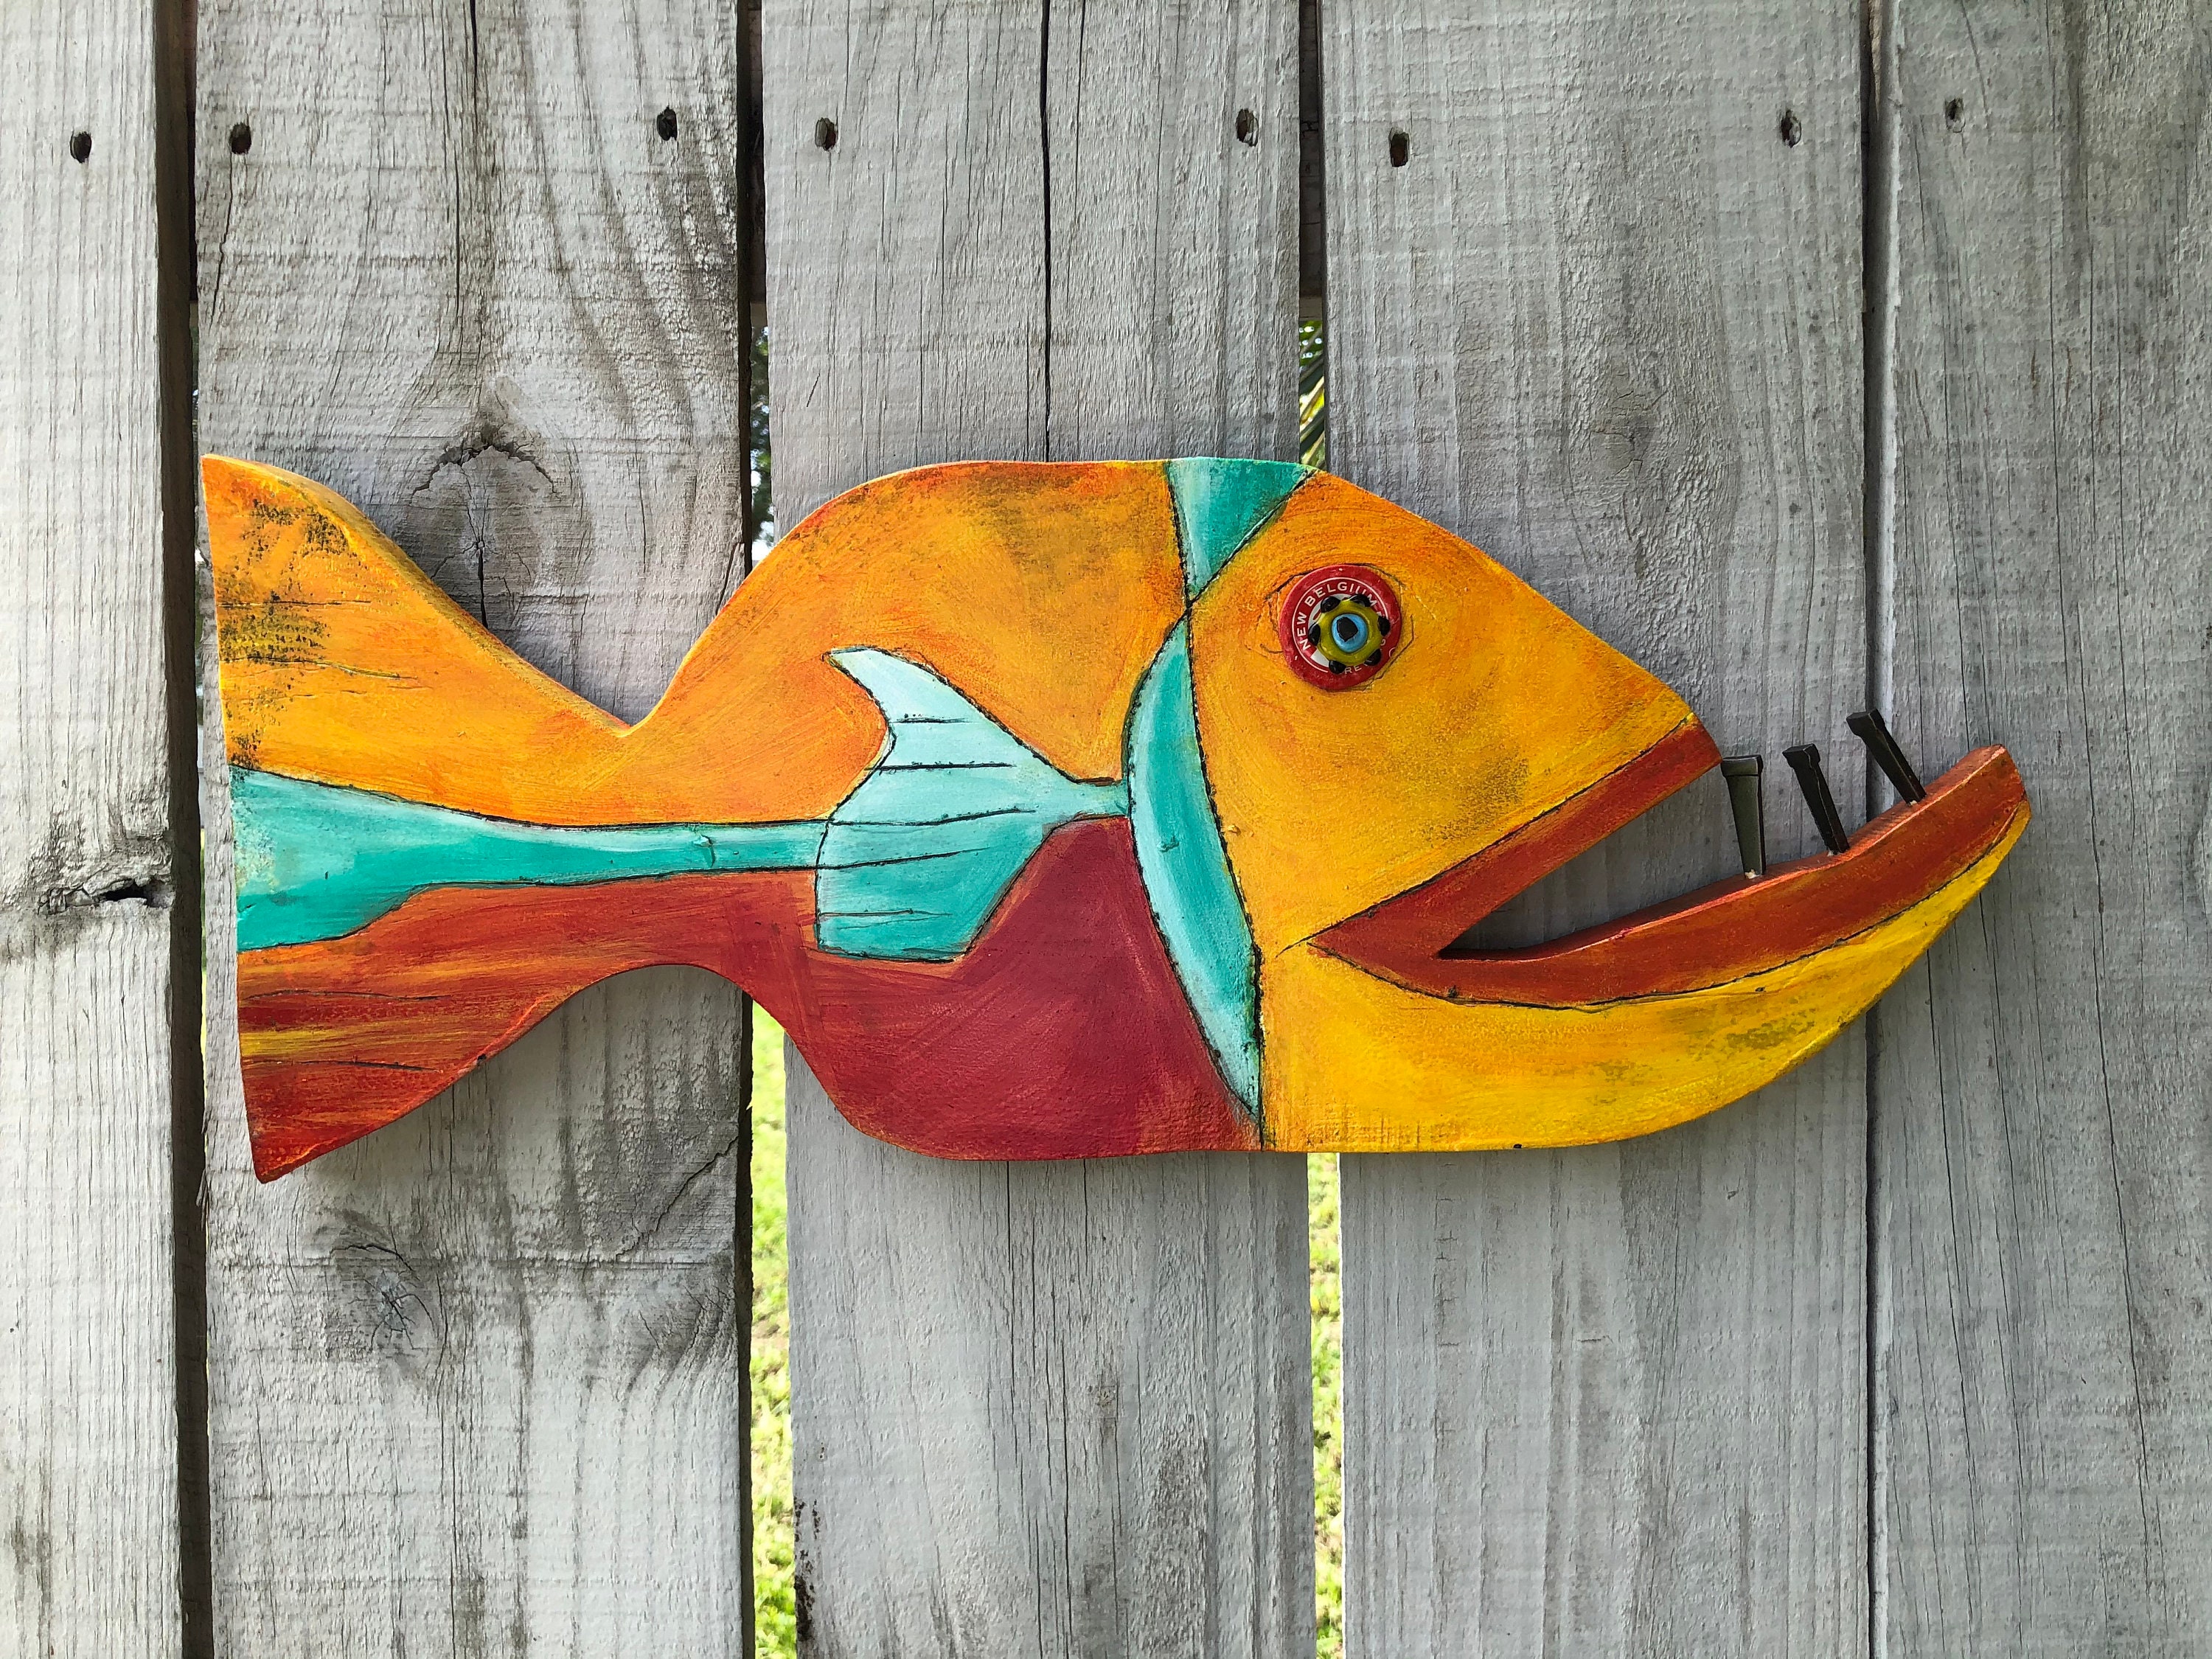 Wooden Fish, Painted Fish, Painted Wooden Fish, Fish Wall Decor, Wood Fish,  Fish Wall Hanging, Fish Art, Fishing, Fisherman Gift, Fish Gift -   Canada